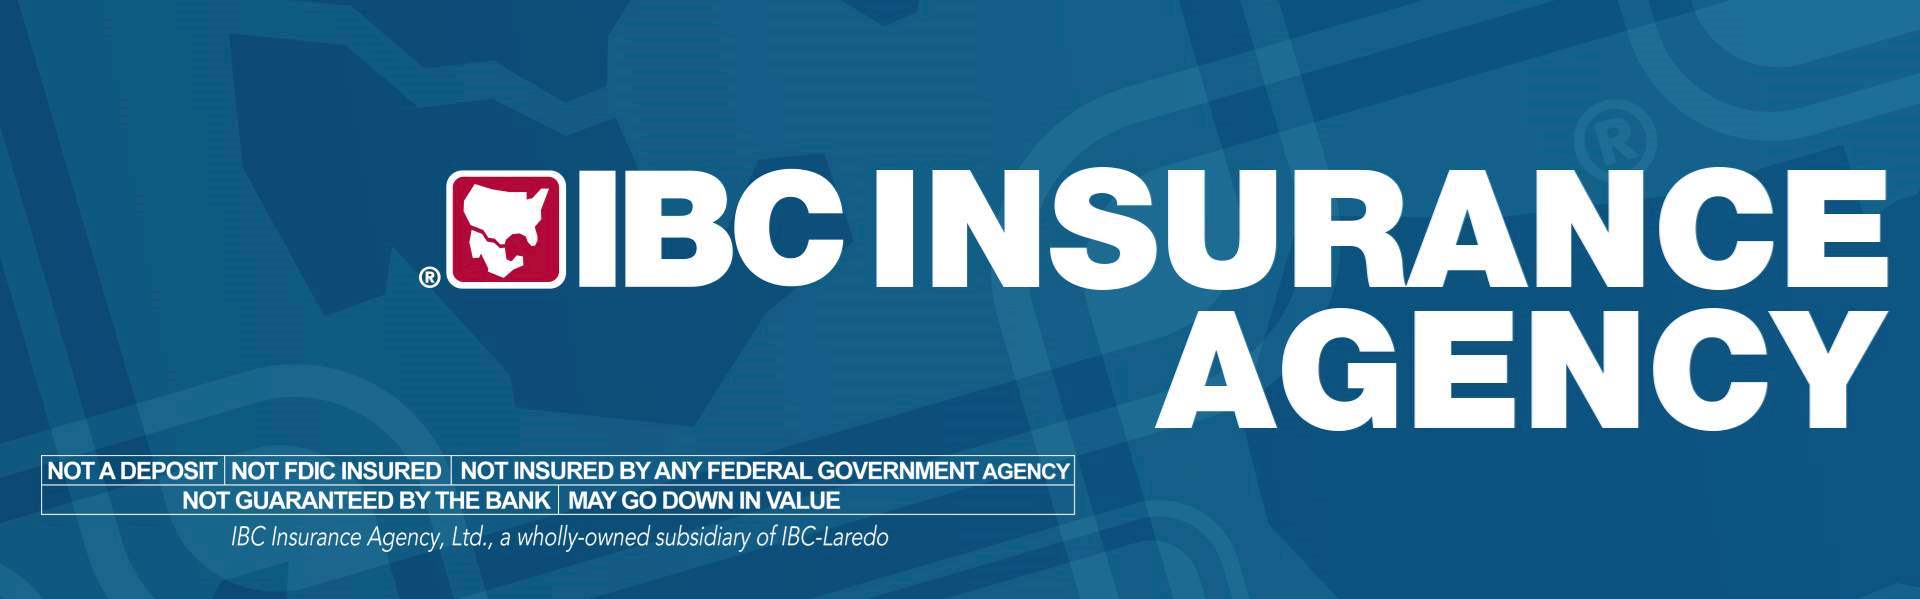 IBC Insurance Agency 